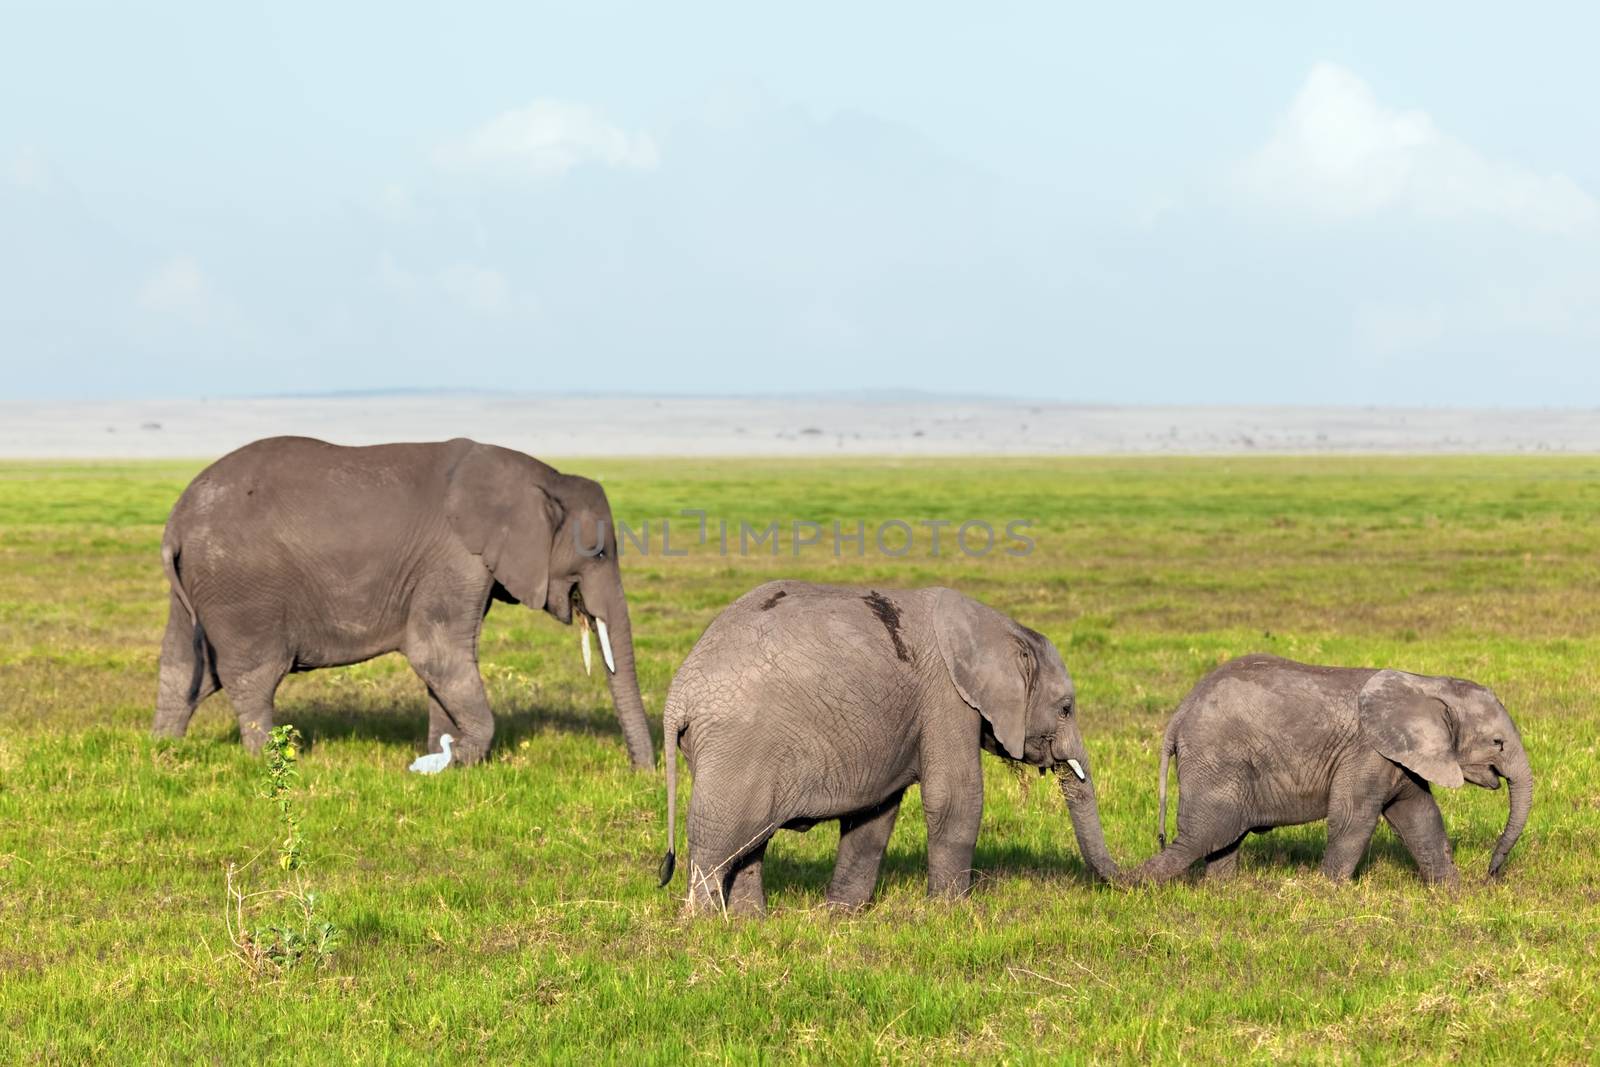 Elephants herd, family on savanna. Safari in Amboseli, Kenya, Africa by photocreo